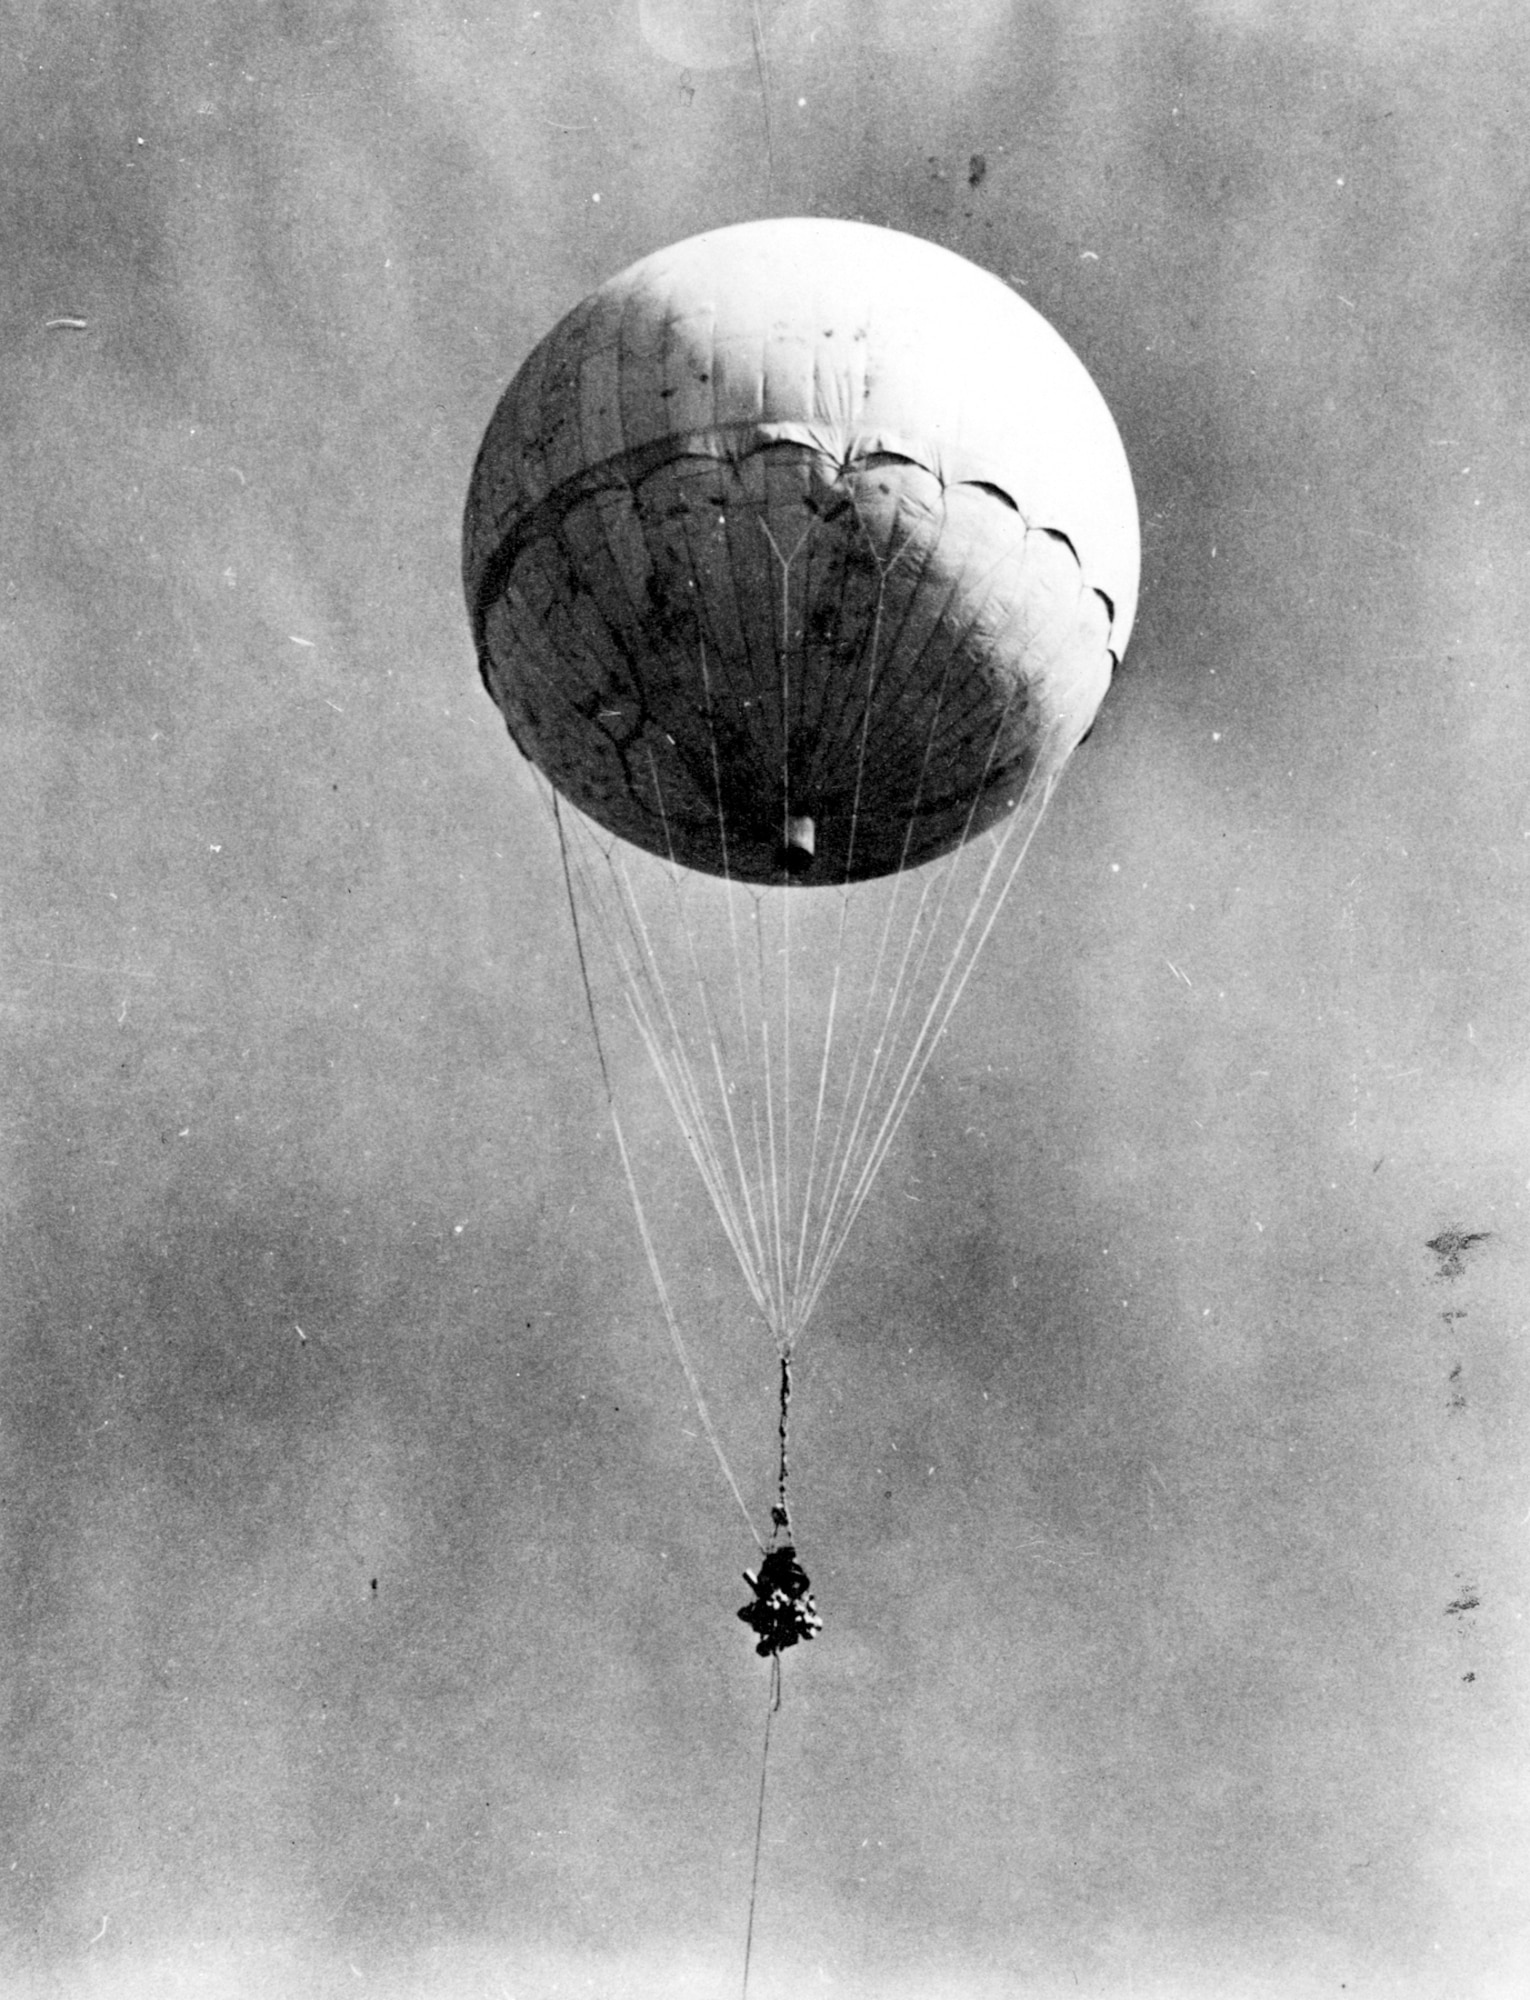 Japanese balloon bomb during World War II. (U.S. Air Force photo)